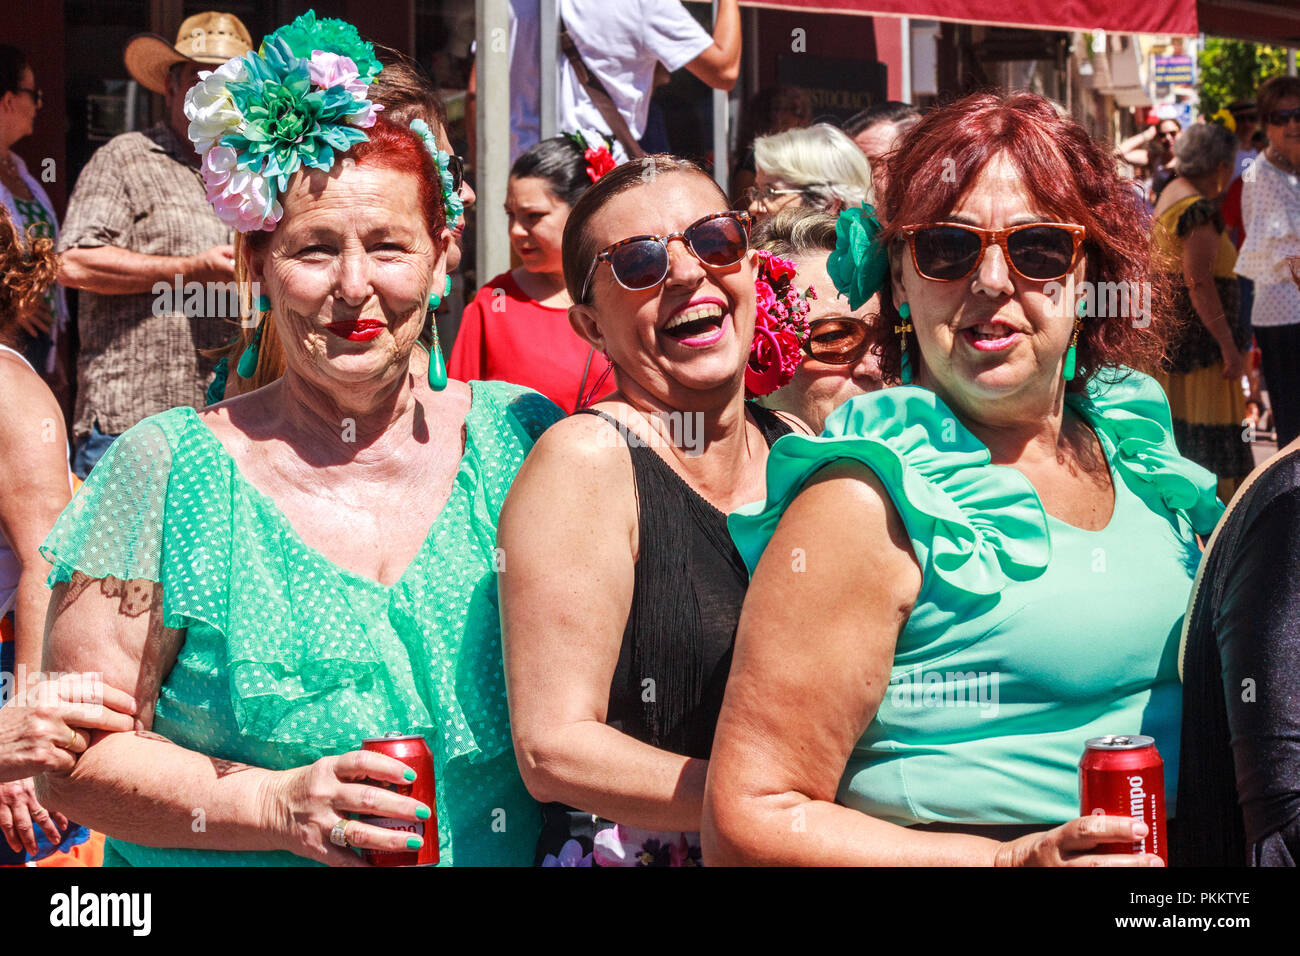 Arroyo de la Miel, Spain - 17th June 2018: Smiling Spanish women enjoying a drink at a local fiesta. Spain is famous for its fiestas. Stock Photo